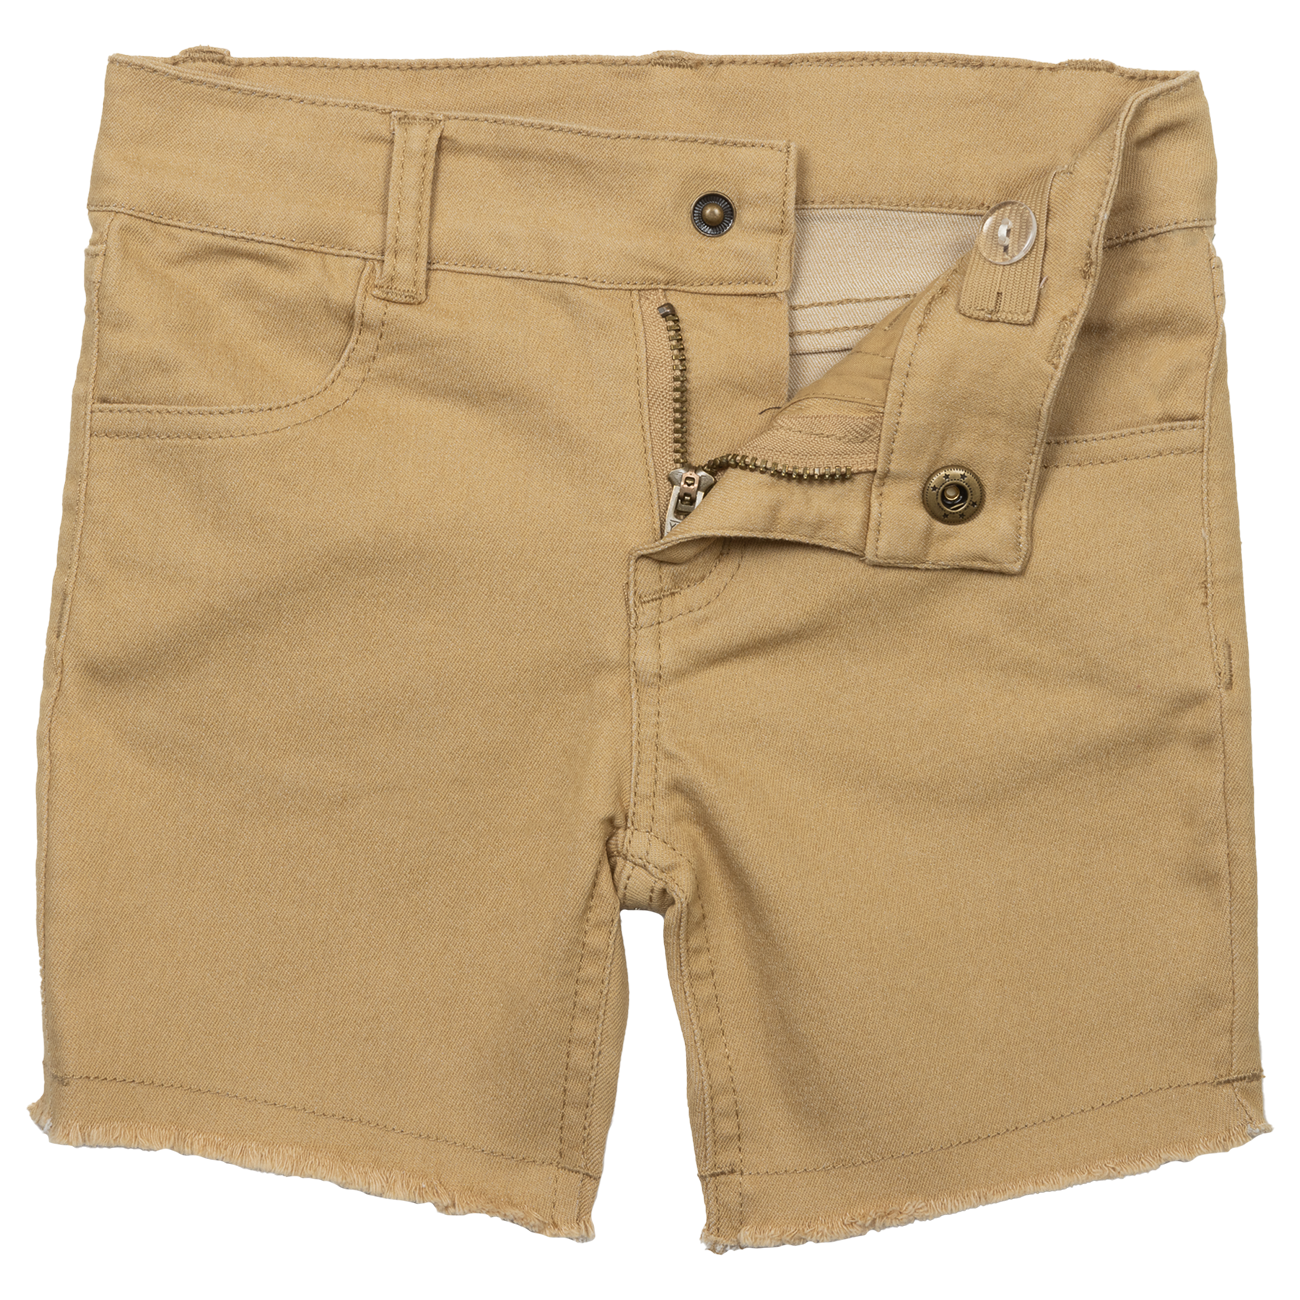 Waco Shorts (Tan): 6 years